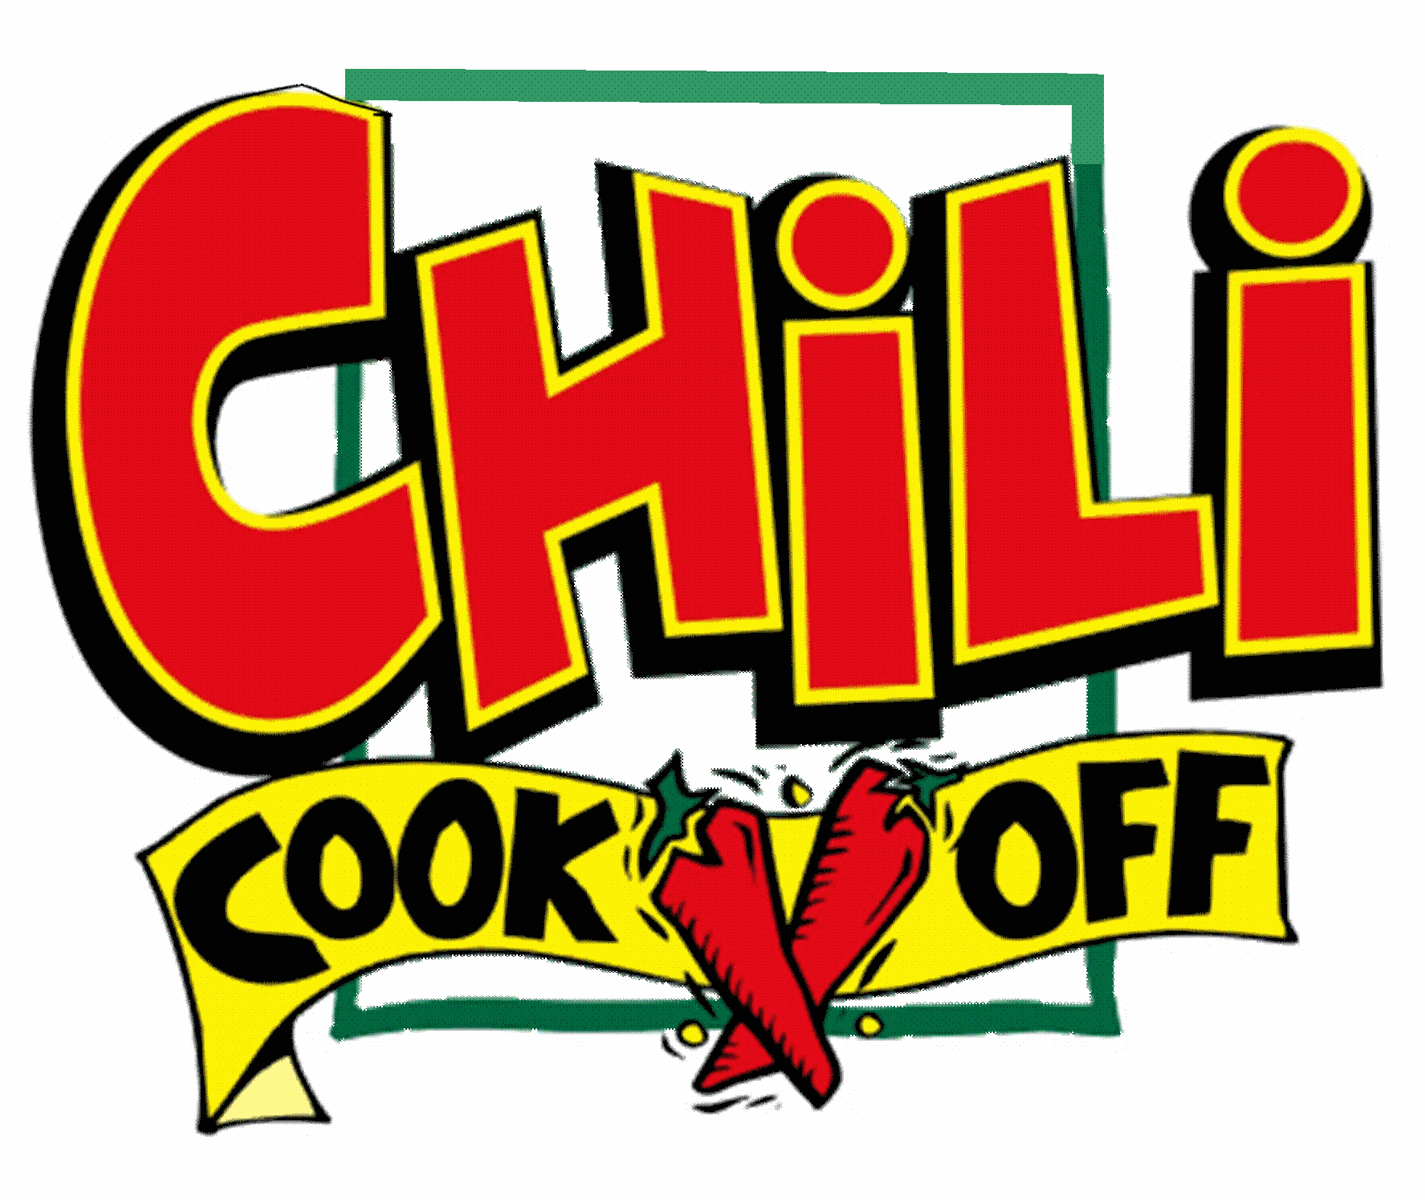 ... Chili Cookoff Clip Art -  - Chili Cook Off Clipart